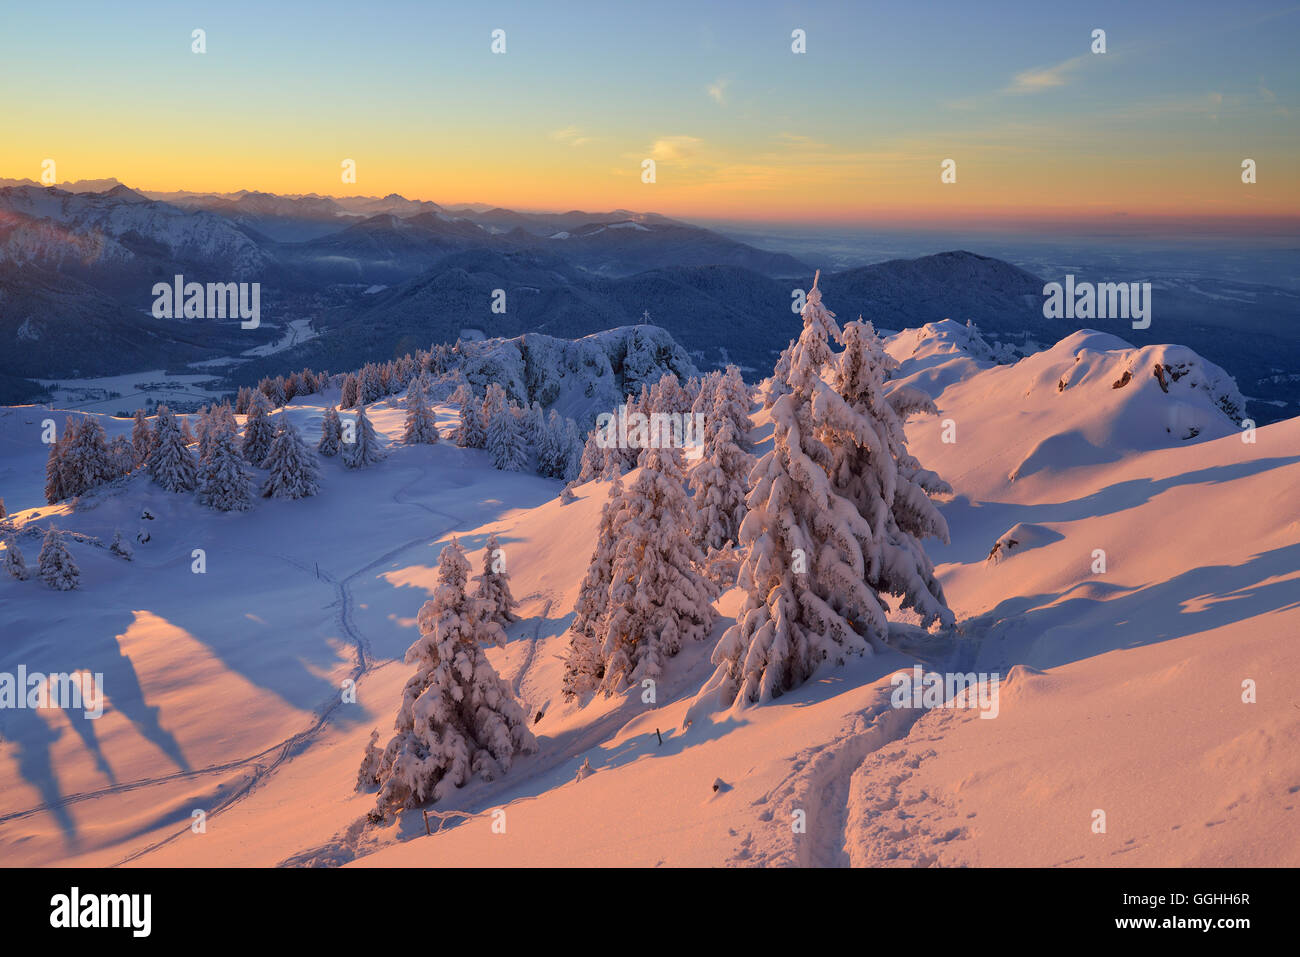 Winter mountain scenery at dusk, Breitenstein, Mangfall Mountains, Bavarian Prealps, Upper Bavaria, Bavaria, Germany Stock Photo